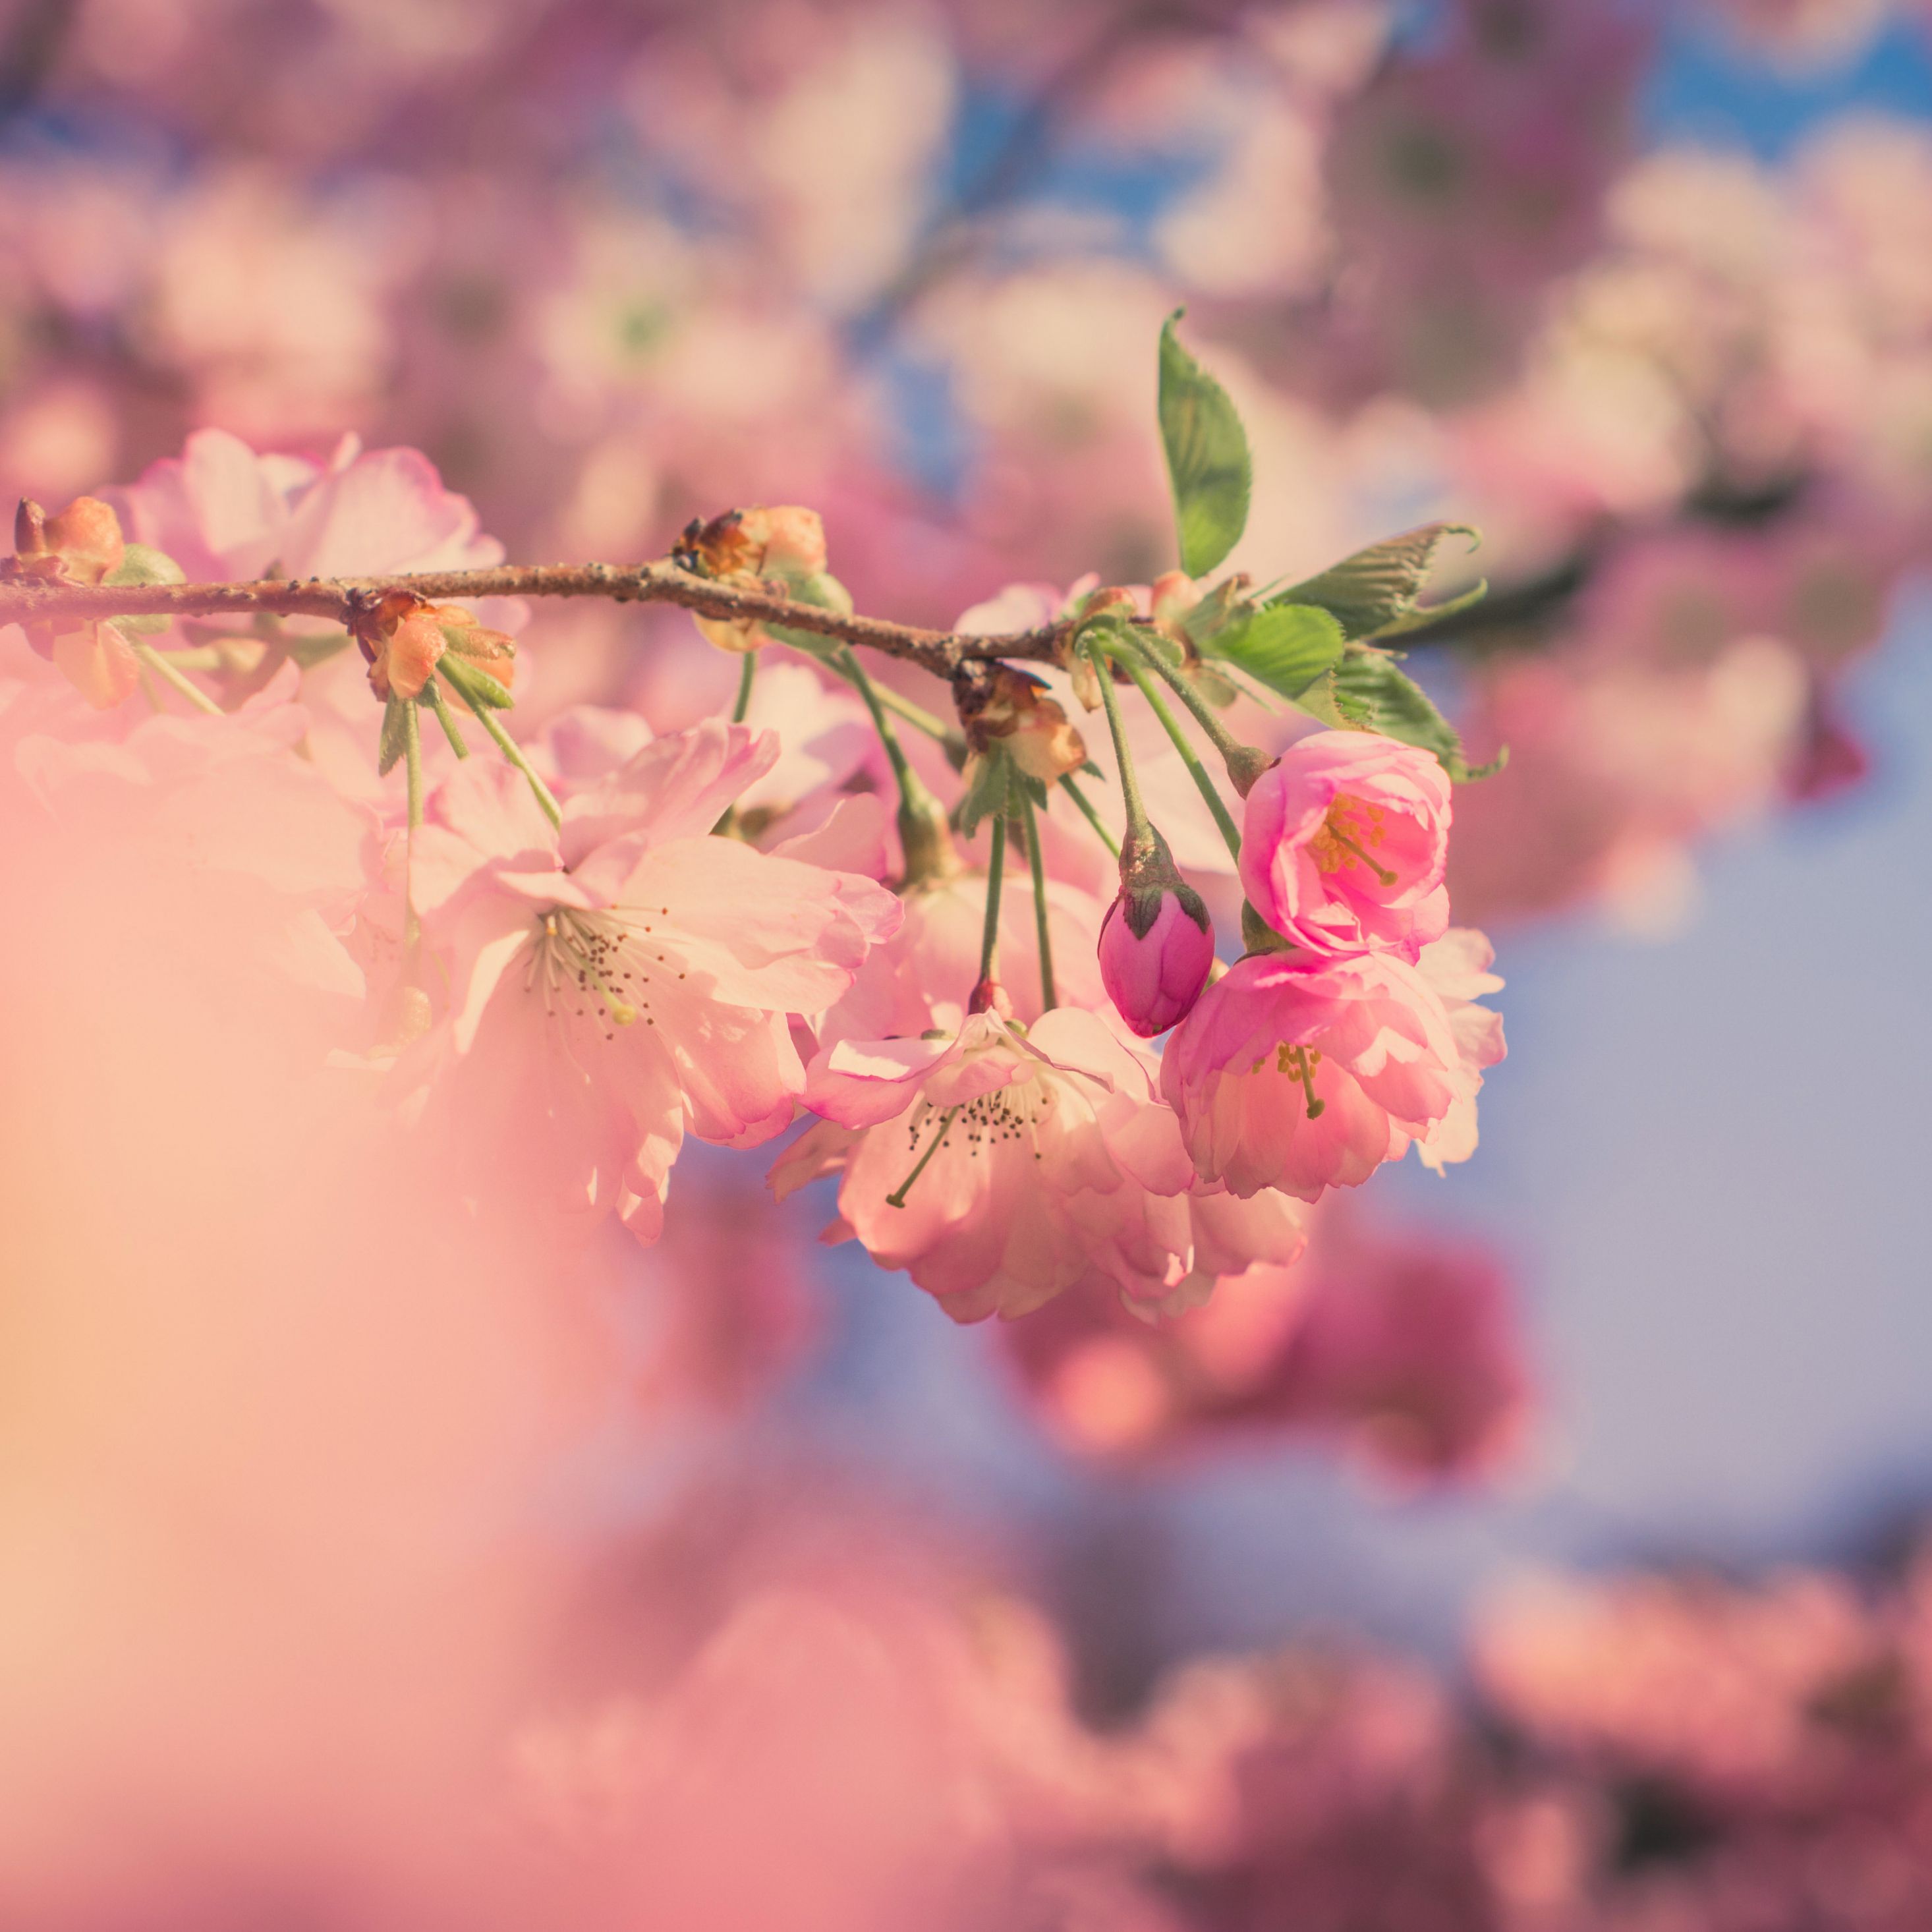 Download wallpaper 2932x2932 pink flowers, cherry blossom, spring, blur, ipad pro retina, 2932x2932 HD background, 3149